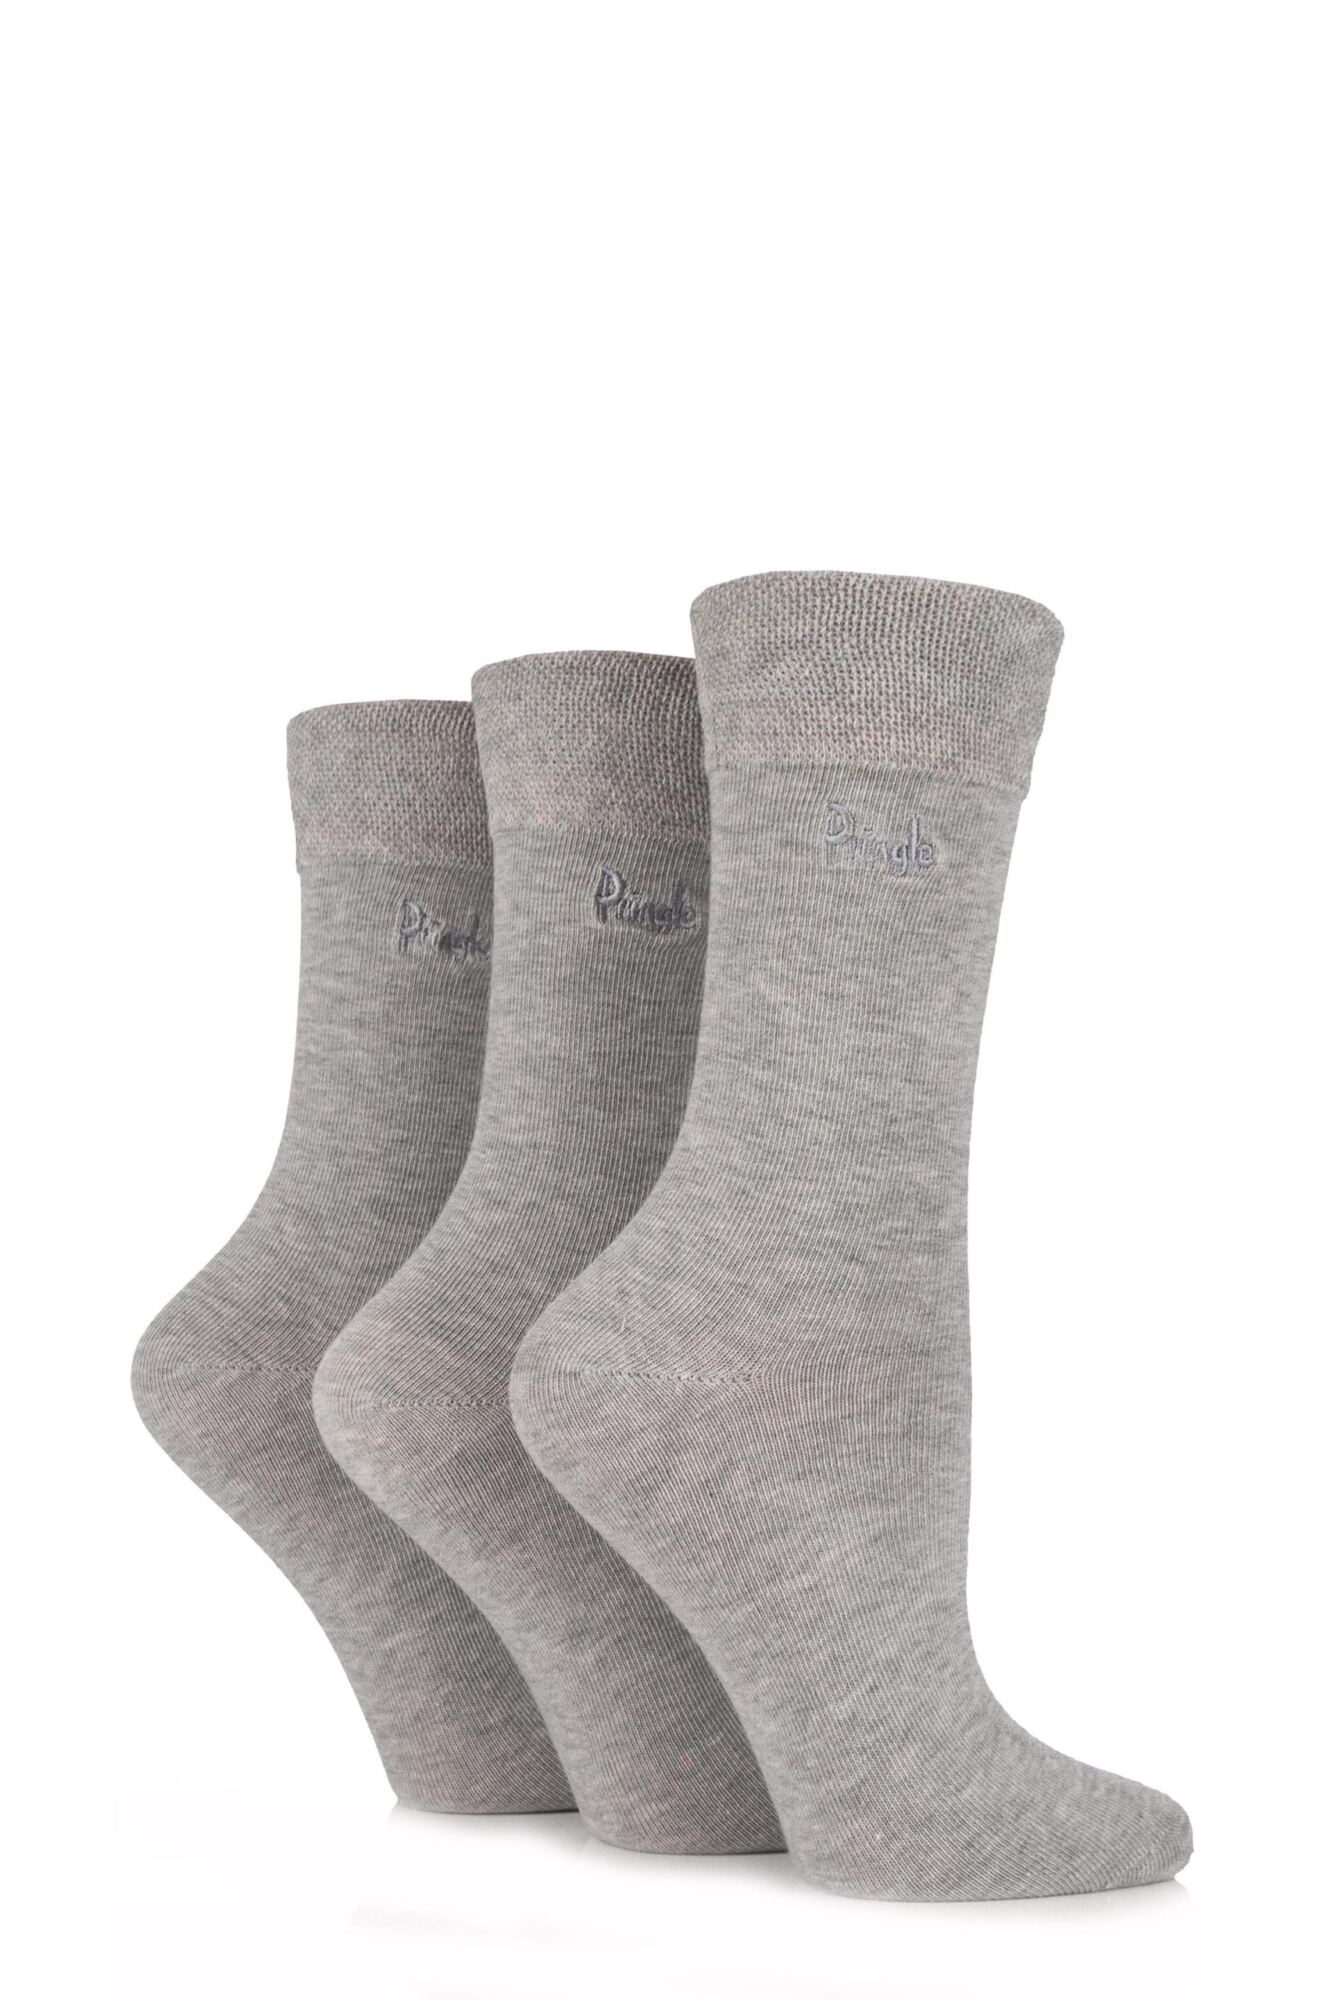 Pringle Jean Plain Comfort Cuff Cotton Socks | SOCKSHOP